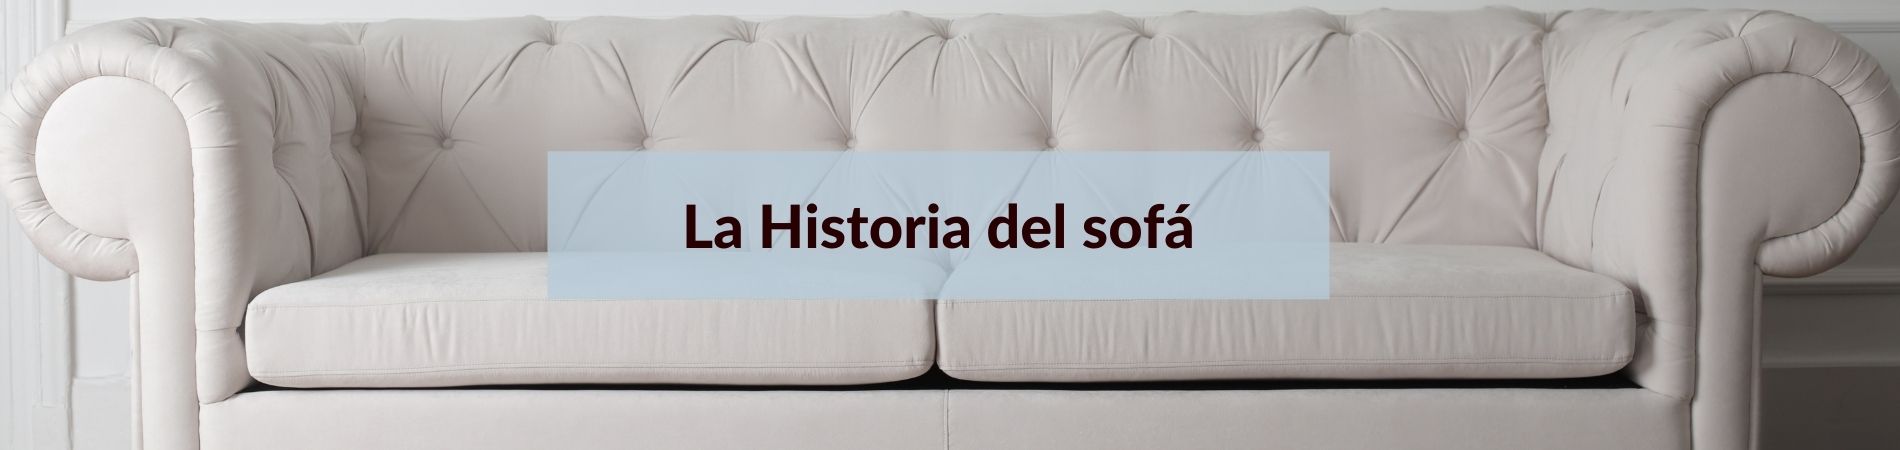 la historia del sofá